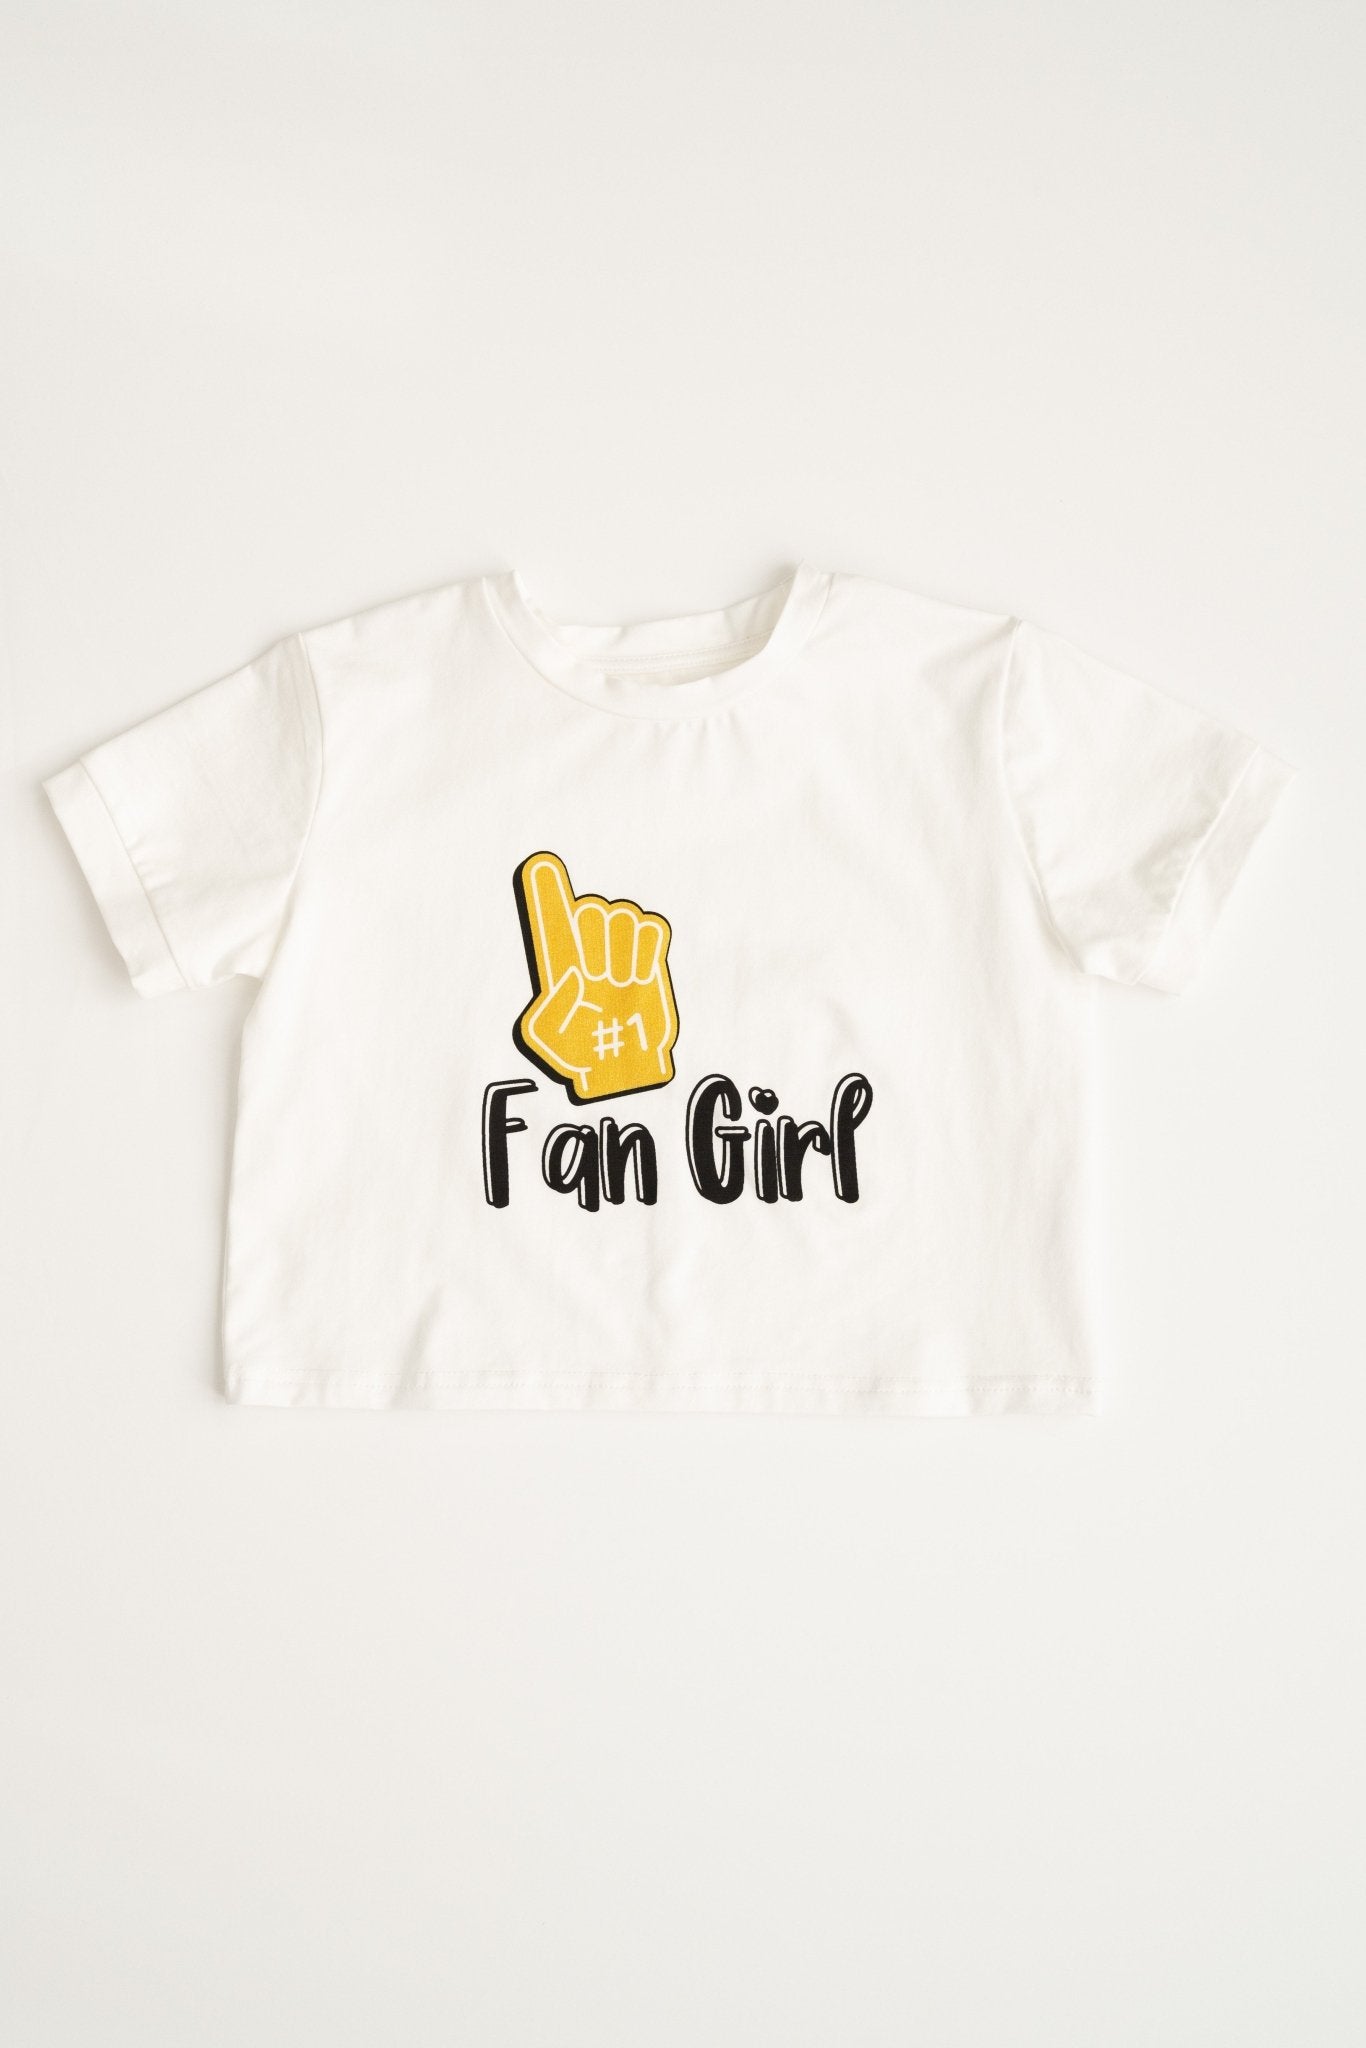 Fan Girl Black & Gold Printed Meet and Greet Length Shirt - Evie's Closet Clothing